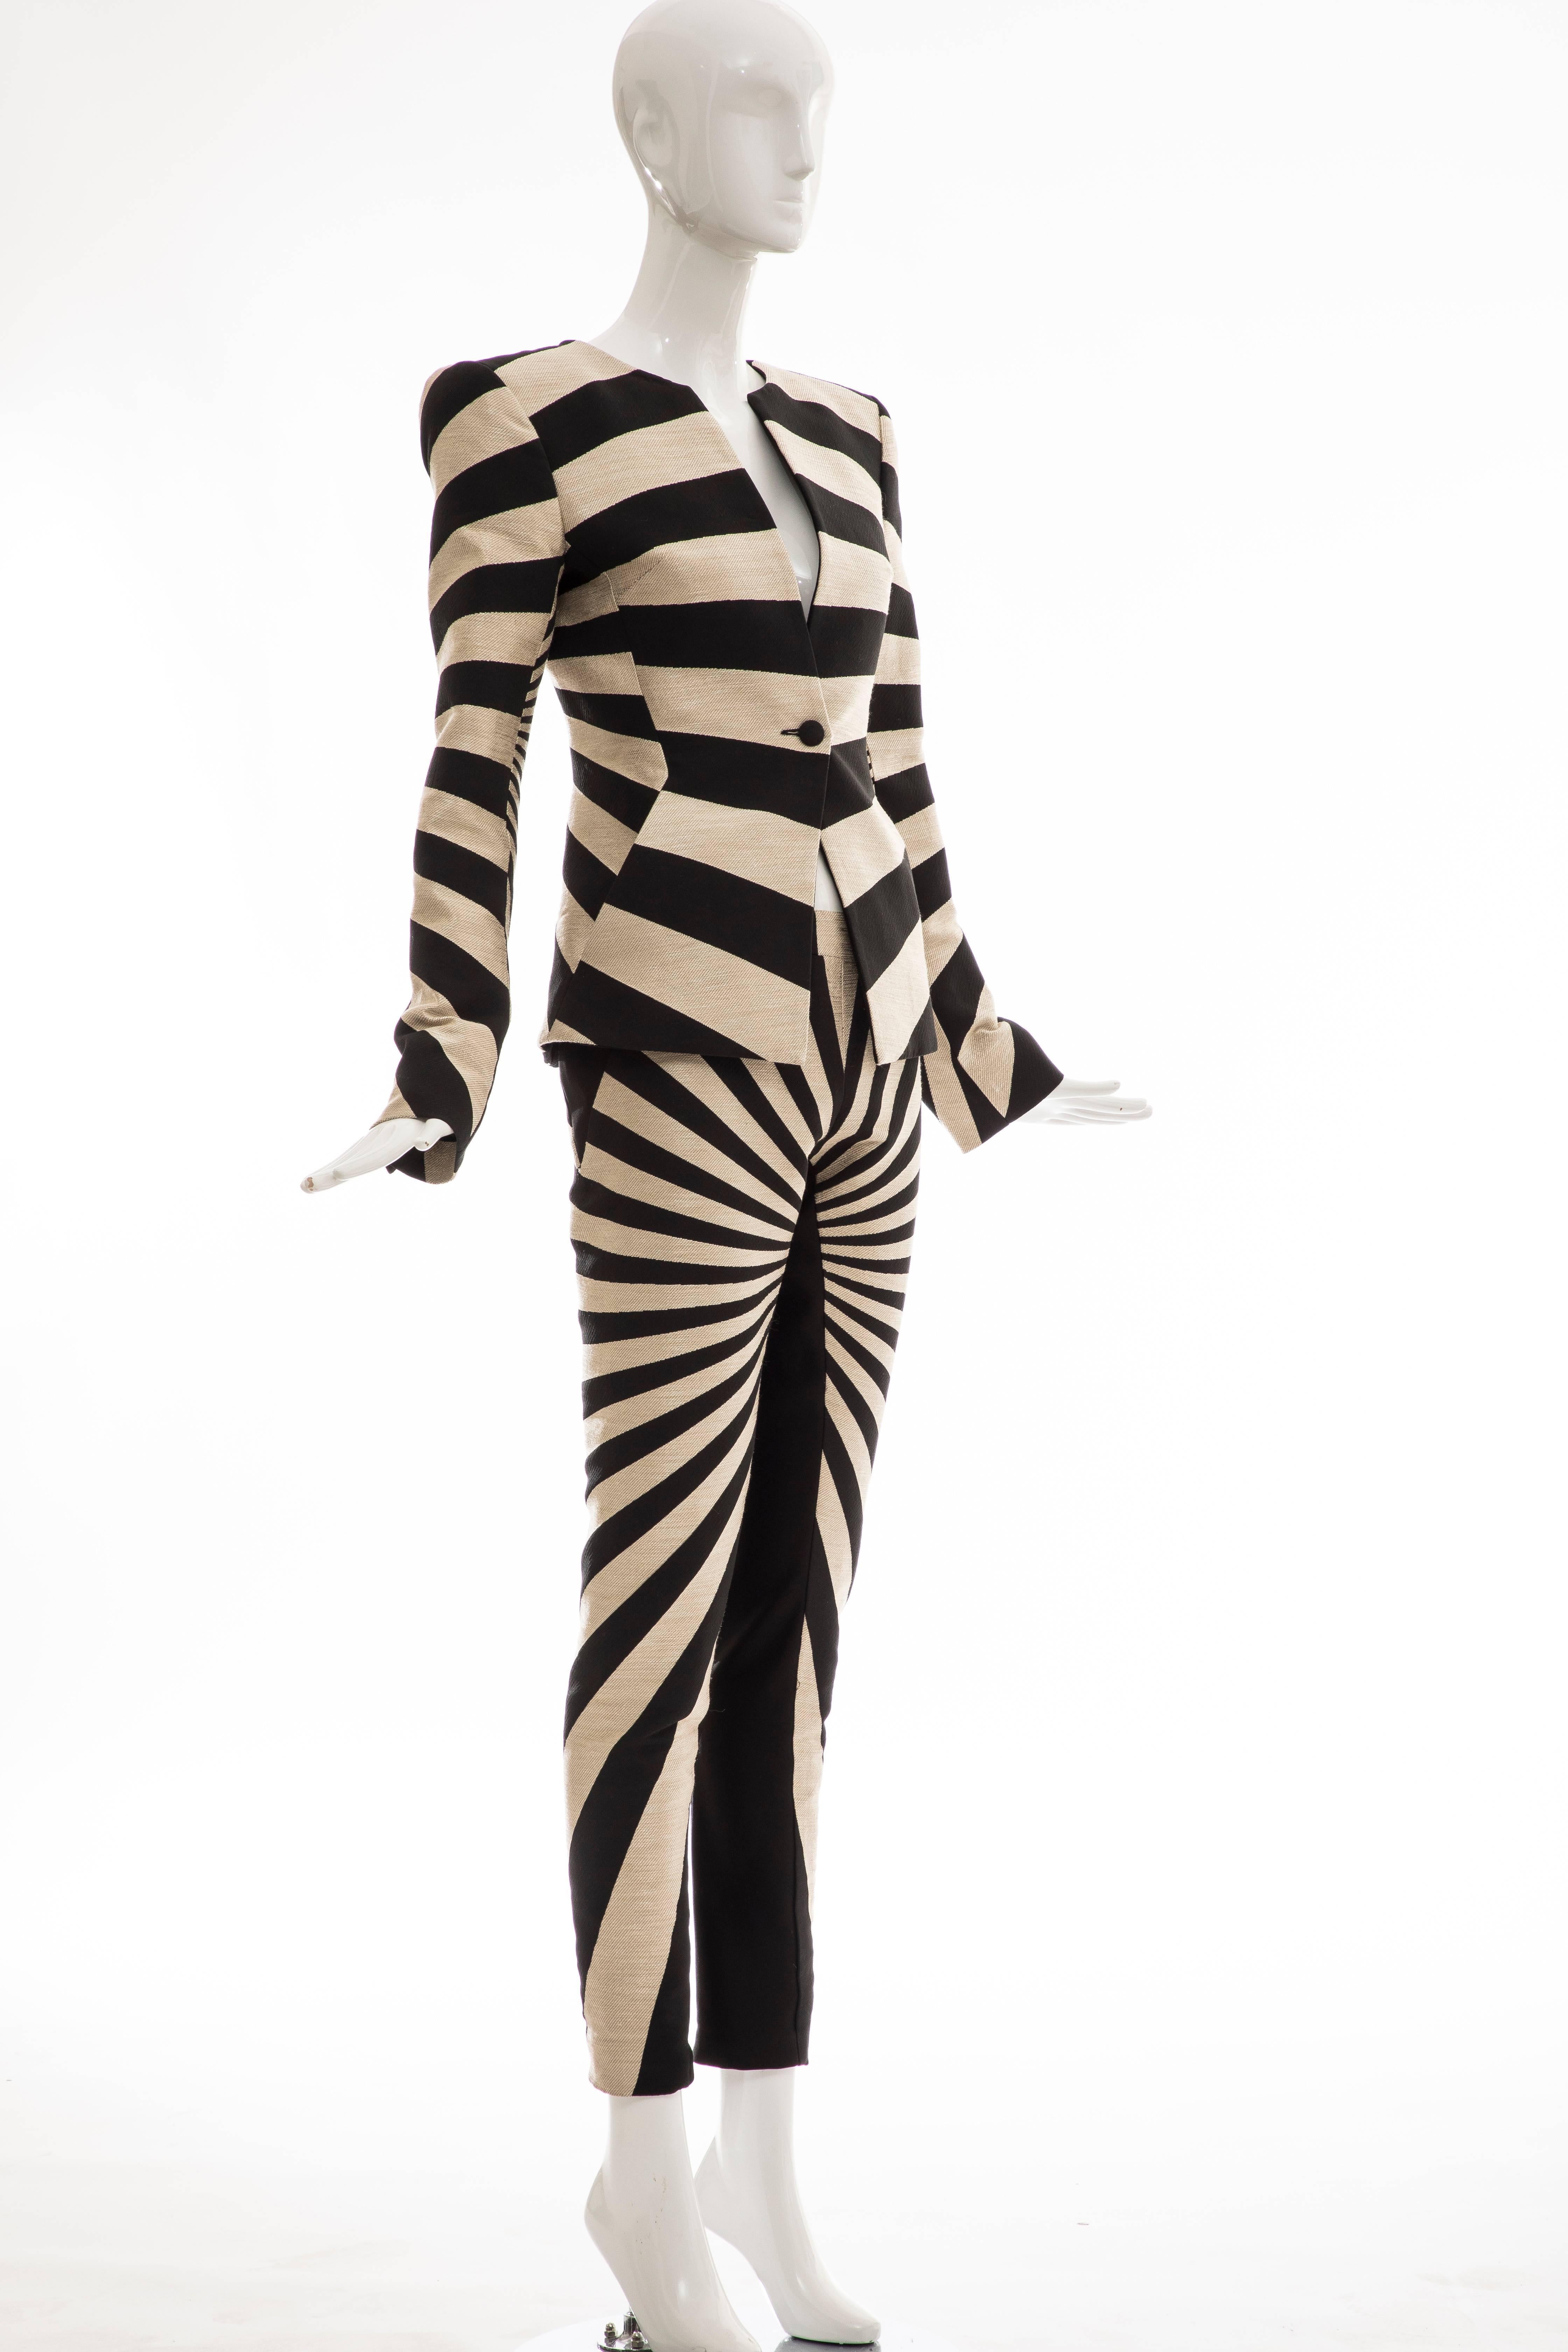 Gareth Pugh Woven Striped Pattern Pantsuit, Spring 2017 For Sale 7